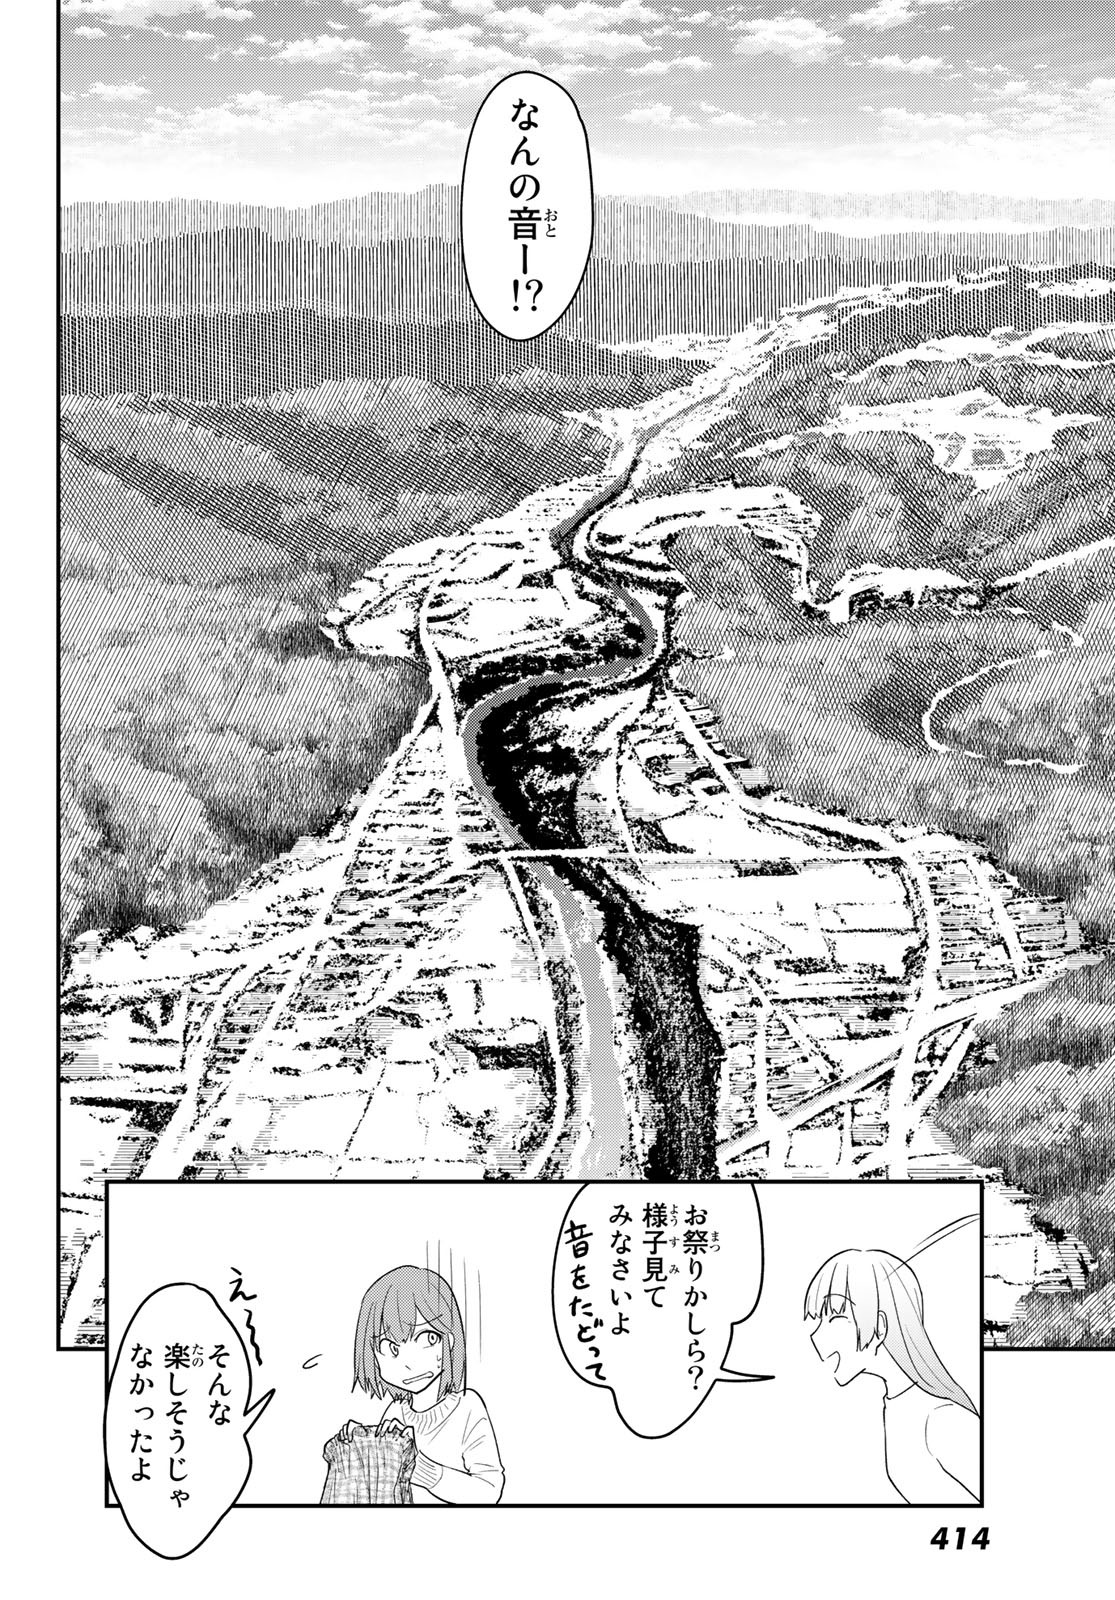 Hiyumi no lnaka-michi - Chapter 13 - Page 2